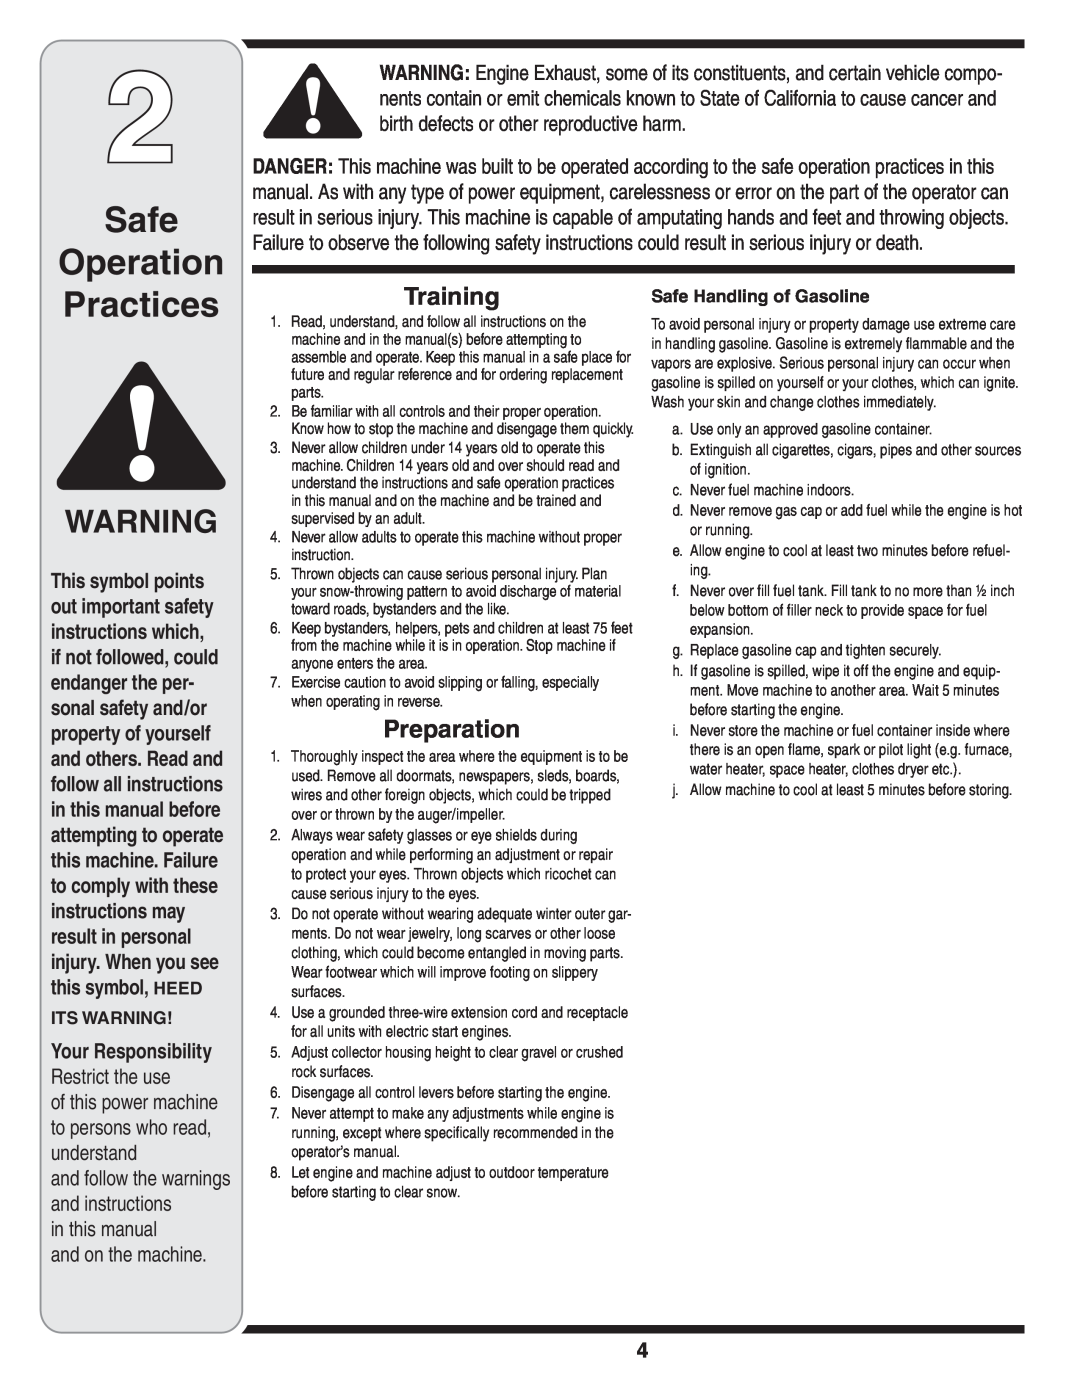 MTD Style L manual Safe Operation, Practices, Training, Preparation, Its Warning, Safe Handling of Gasoline 